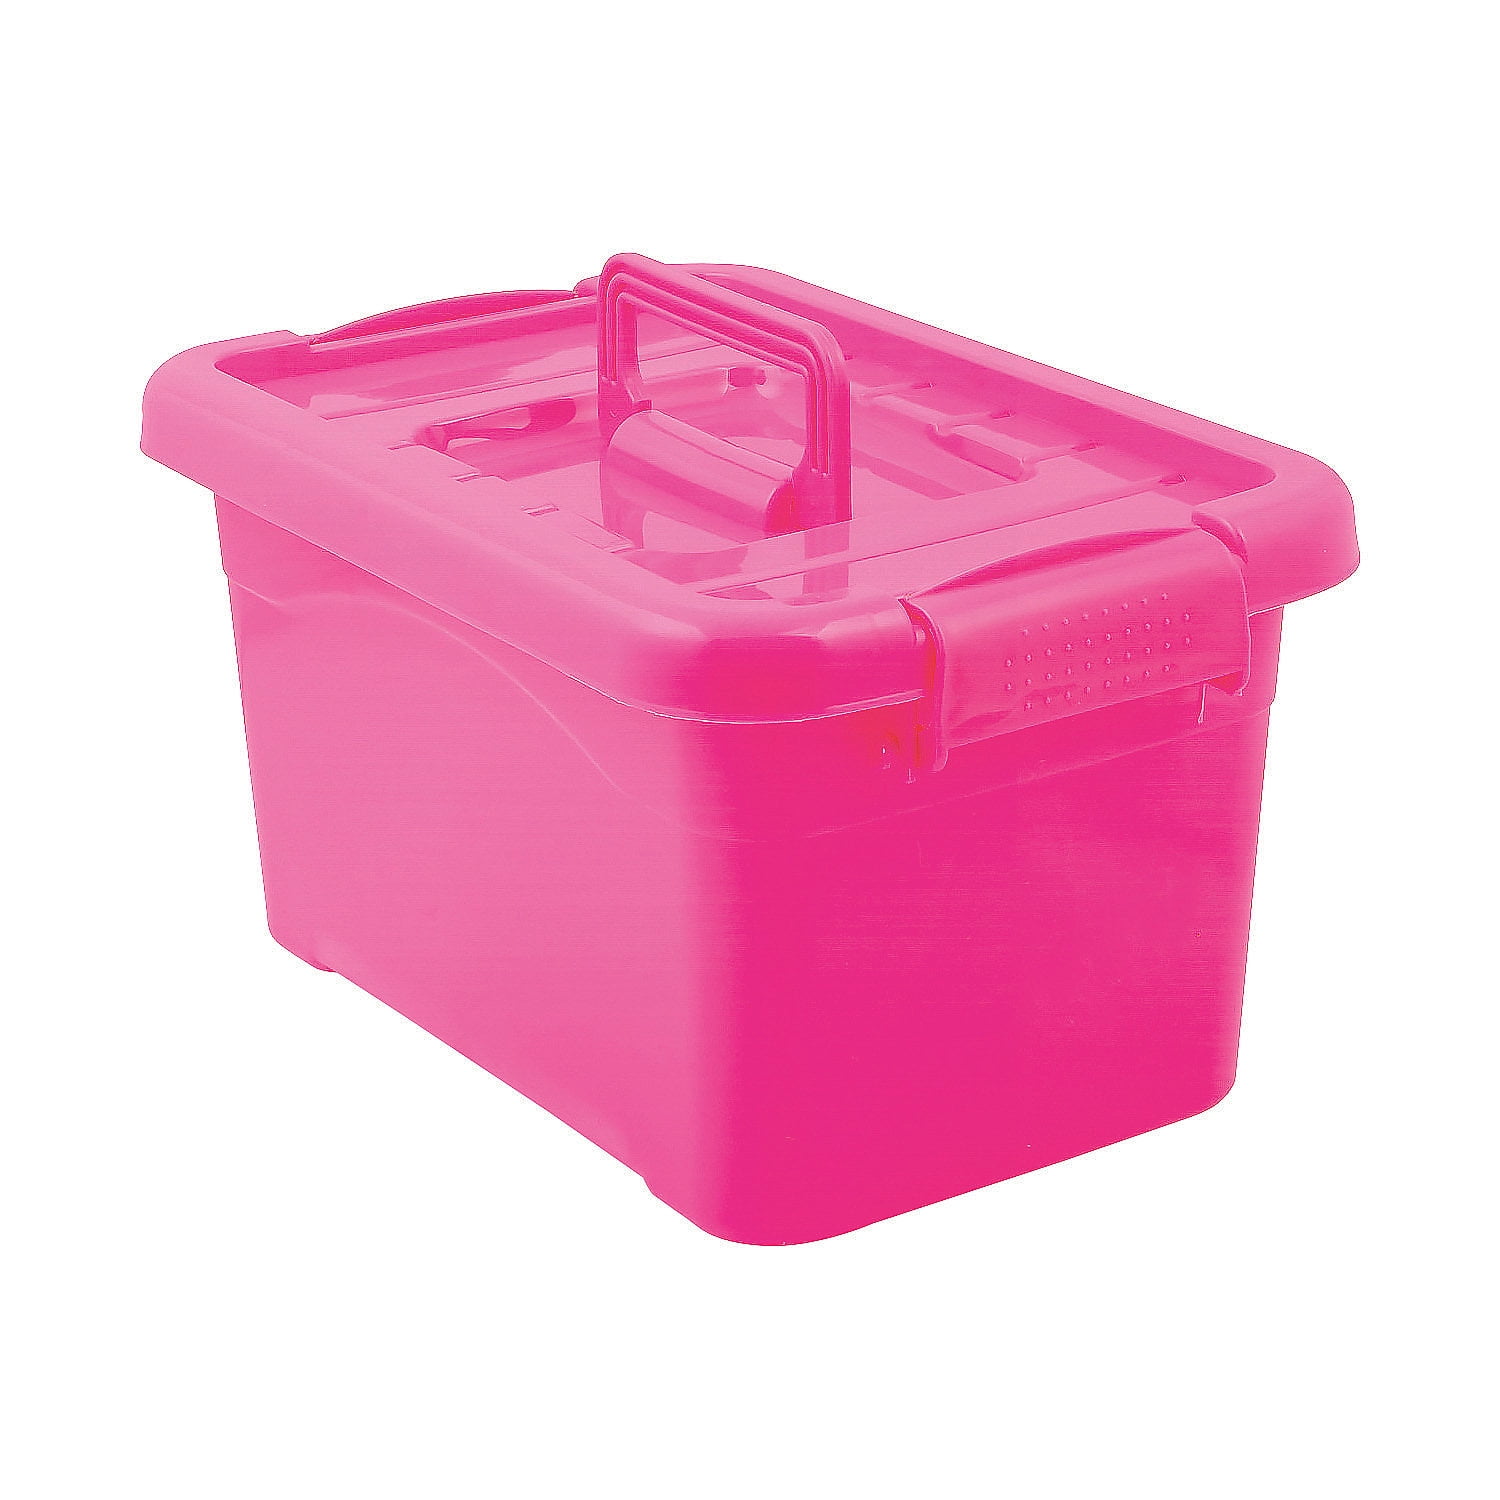 Hot Pink Large Locking Storage Bins, Colored Storage Bins With Lids